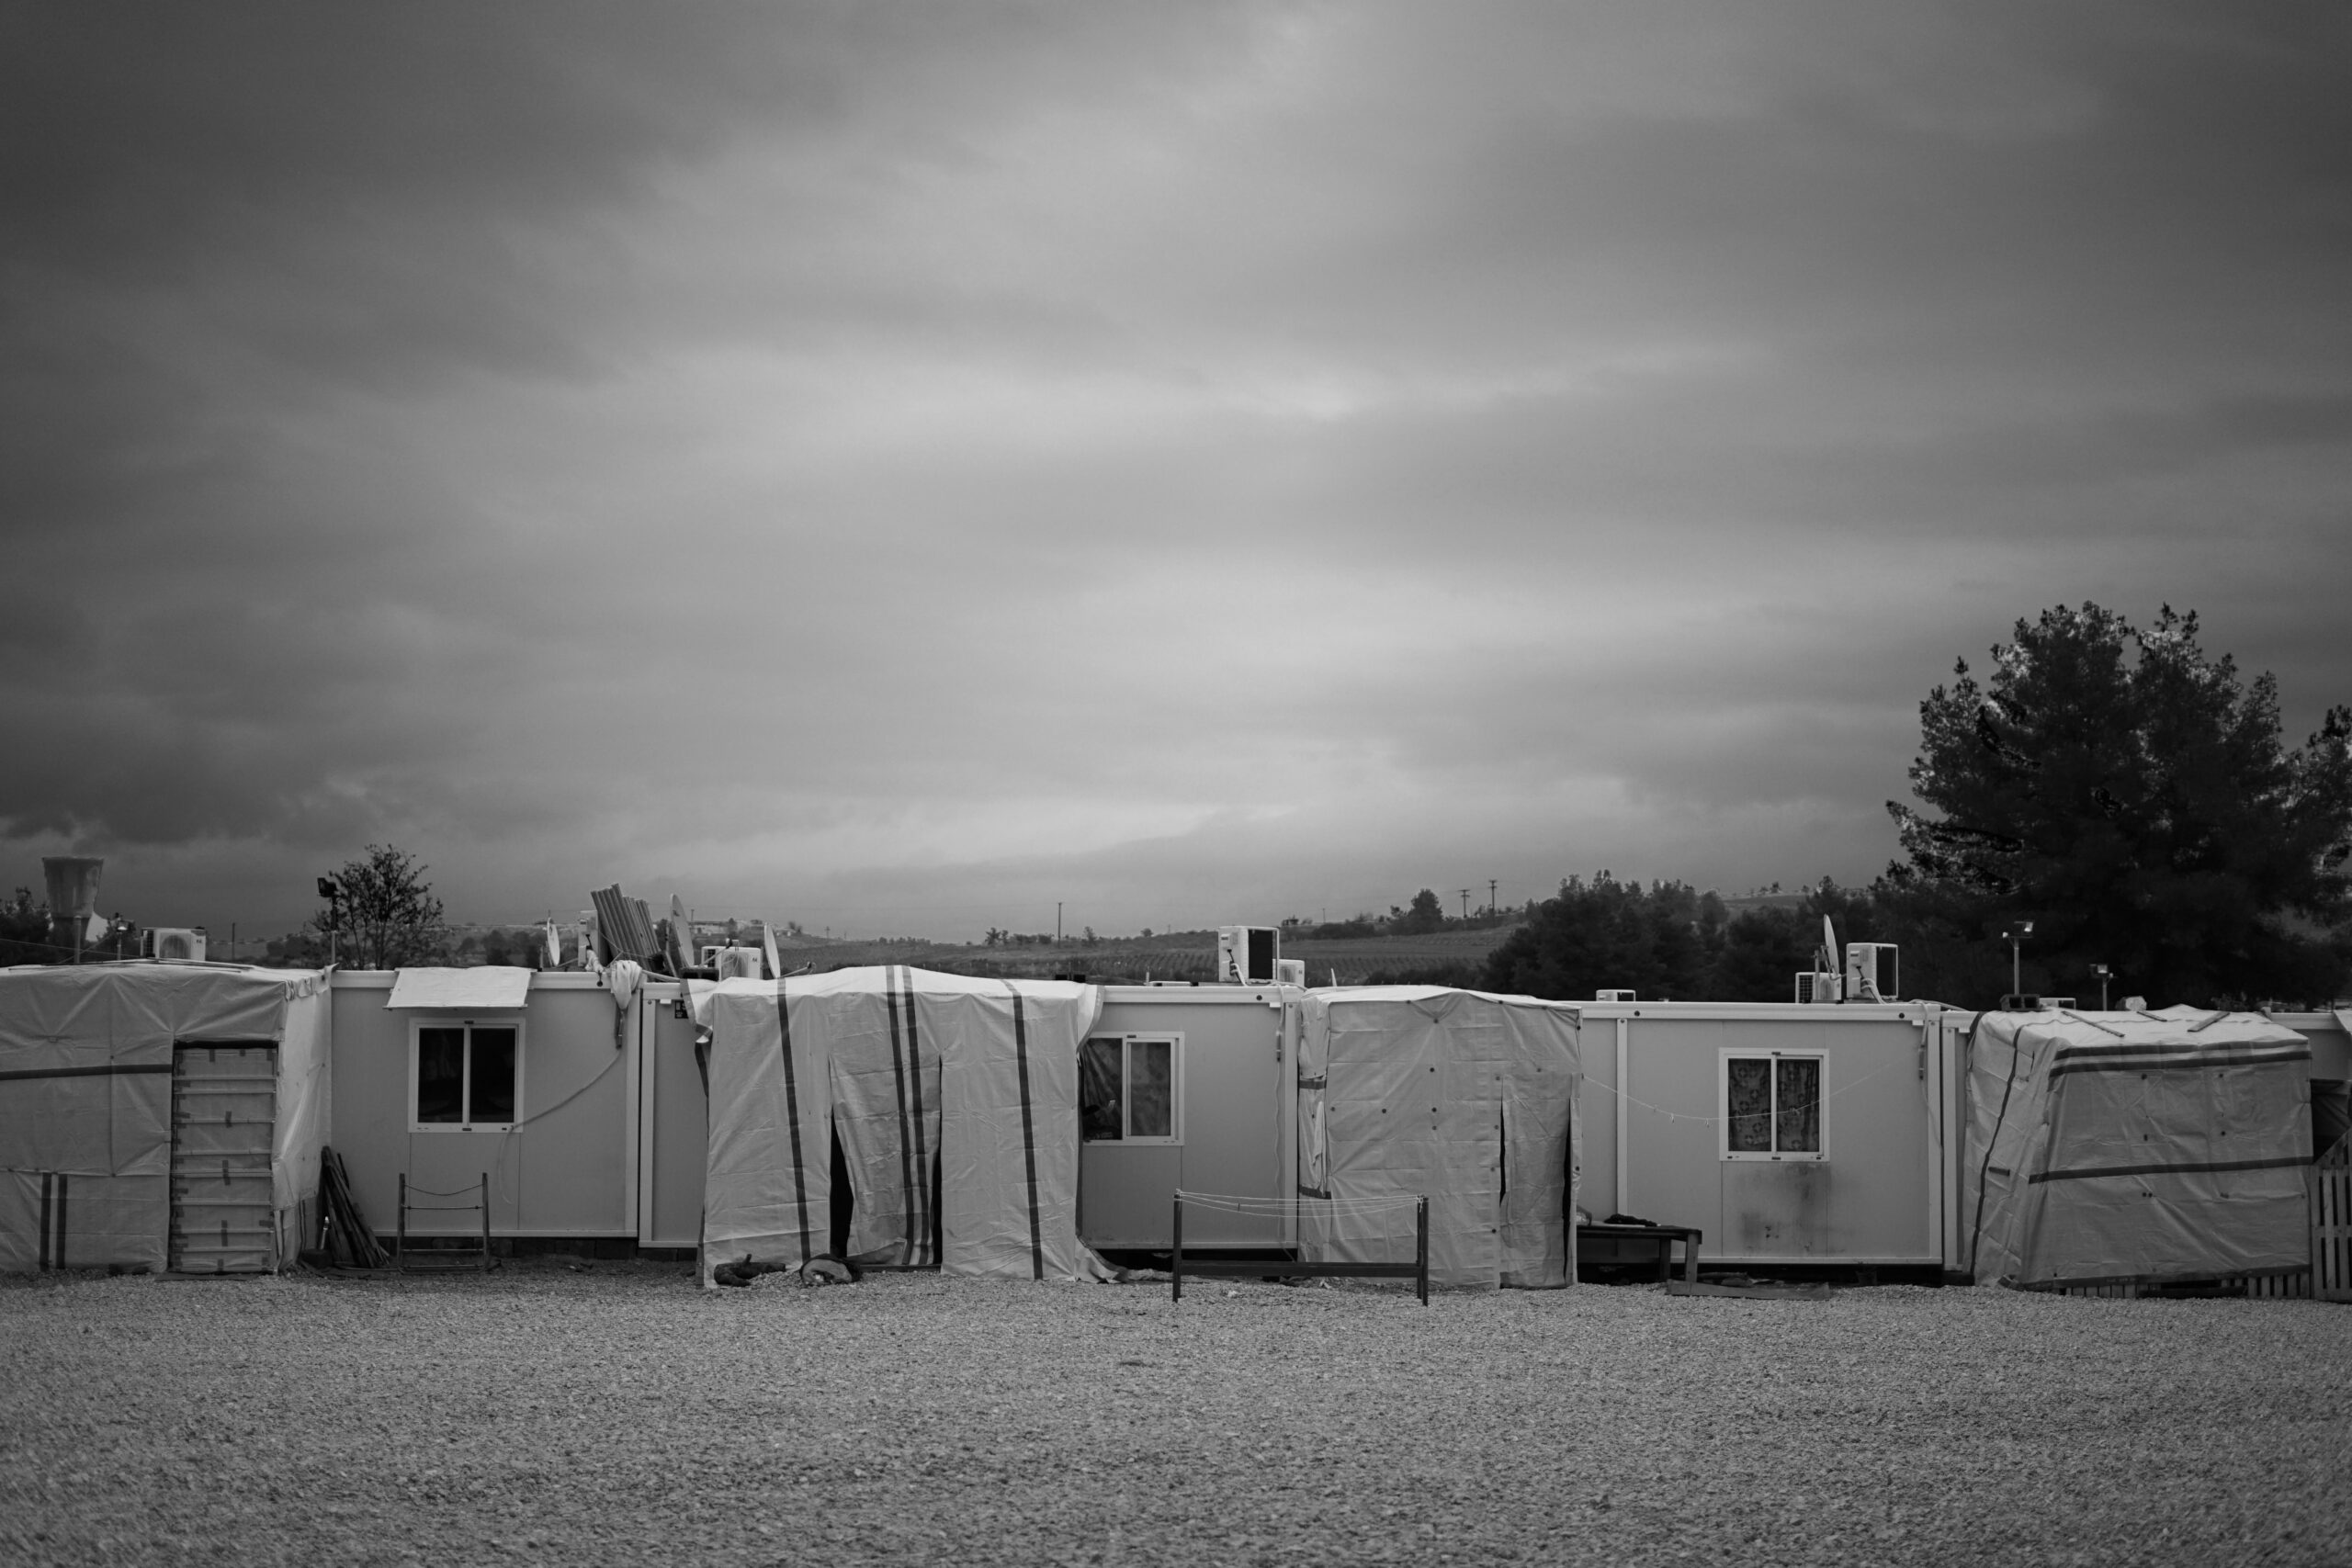 An image of a refugee camp